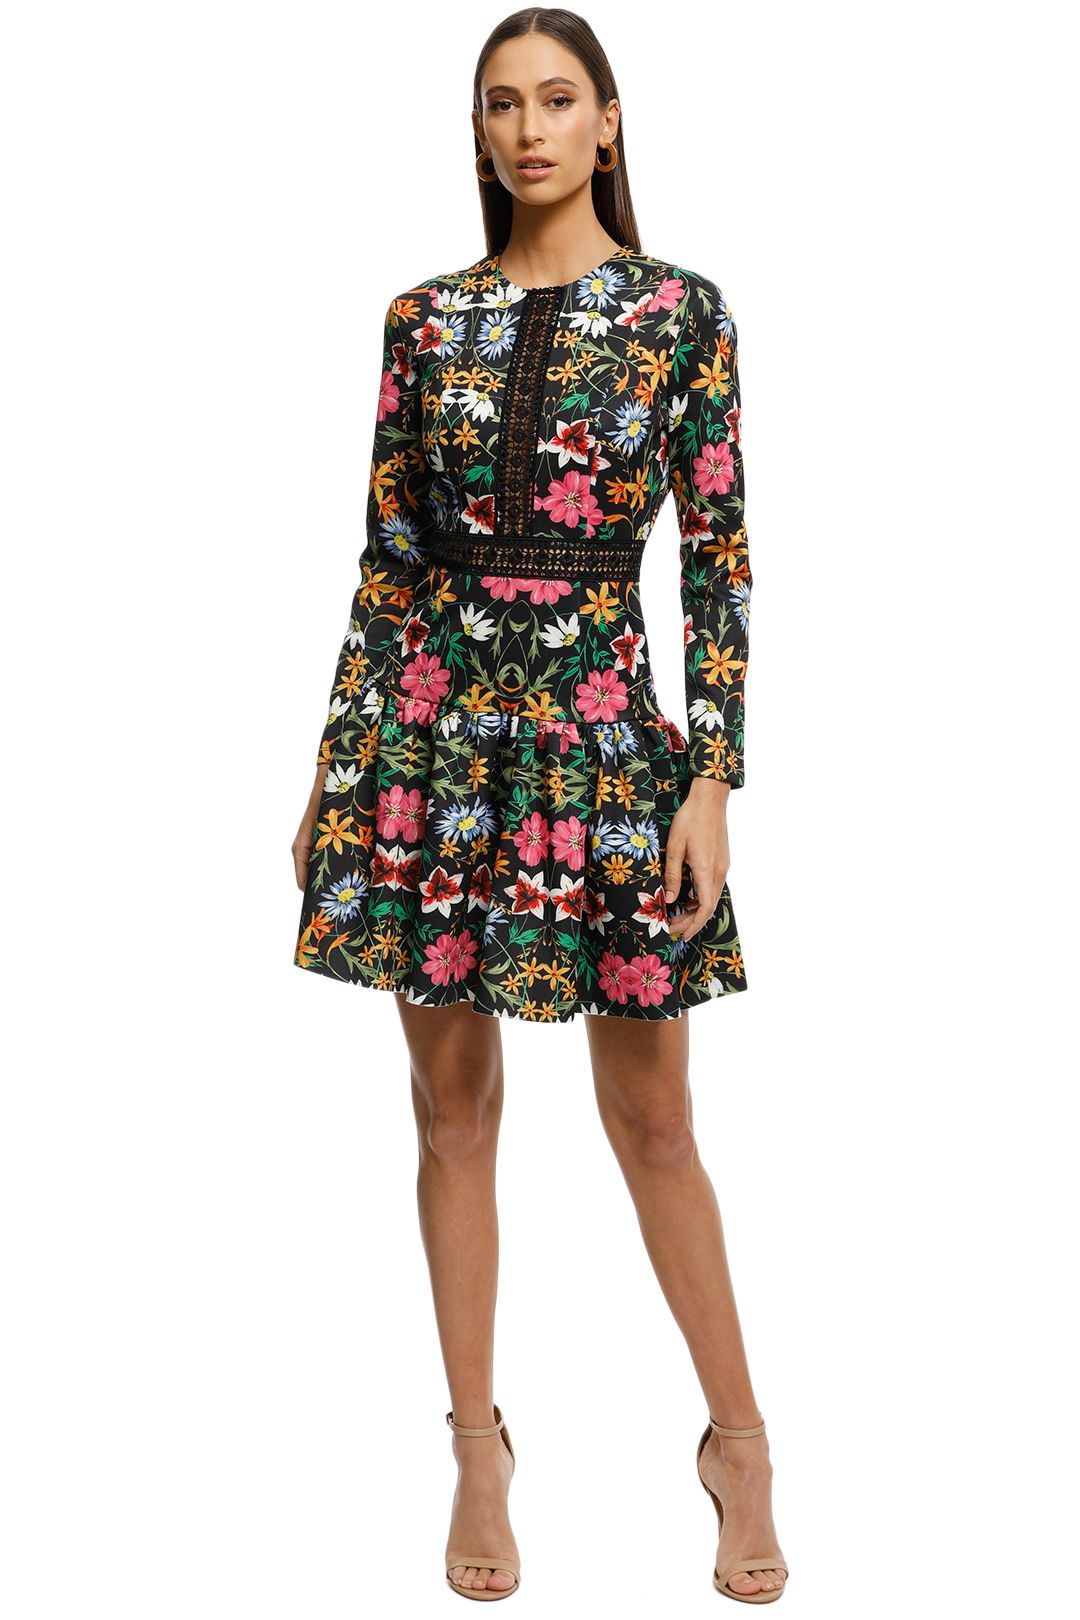 Alexia-Admor-Long-Sleeve-Lace-Knit-Trim-Floral-Print-Dress-Black-Multi-Front